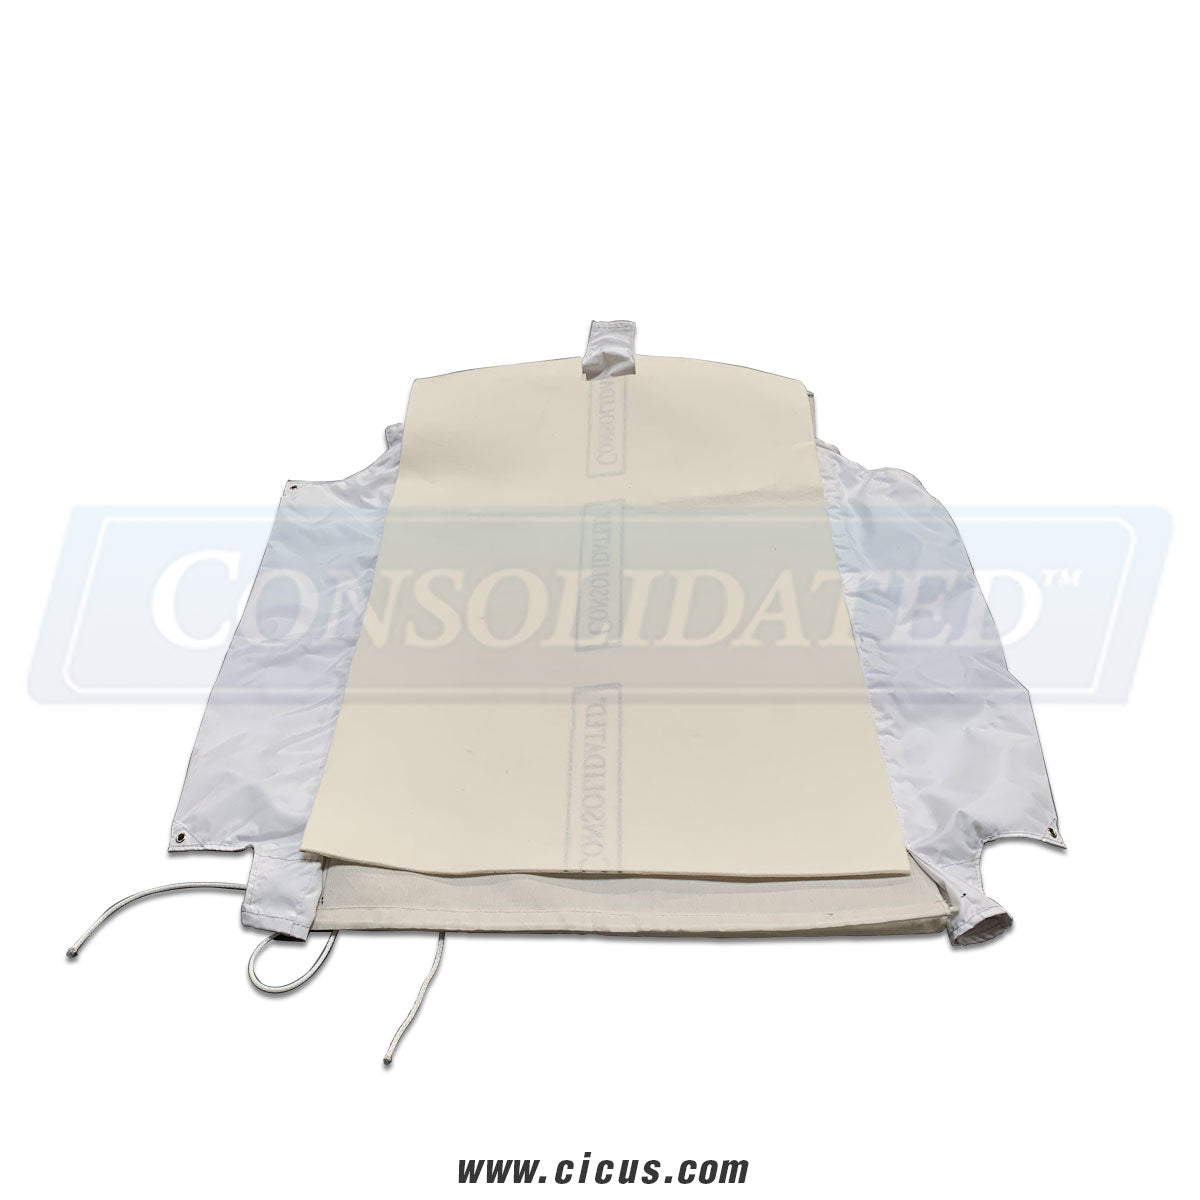 Coronet Cover w/Air Bag DBV 802 801 SBV - Forenta Compatible  [AW-1930]